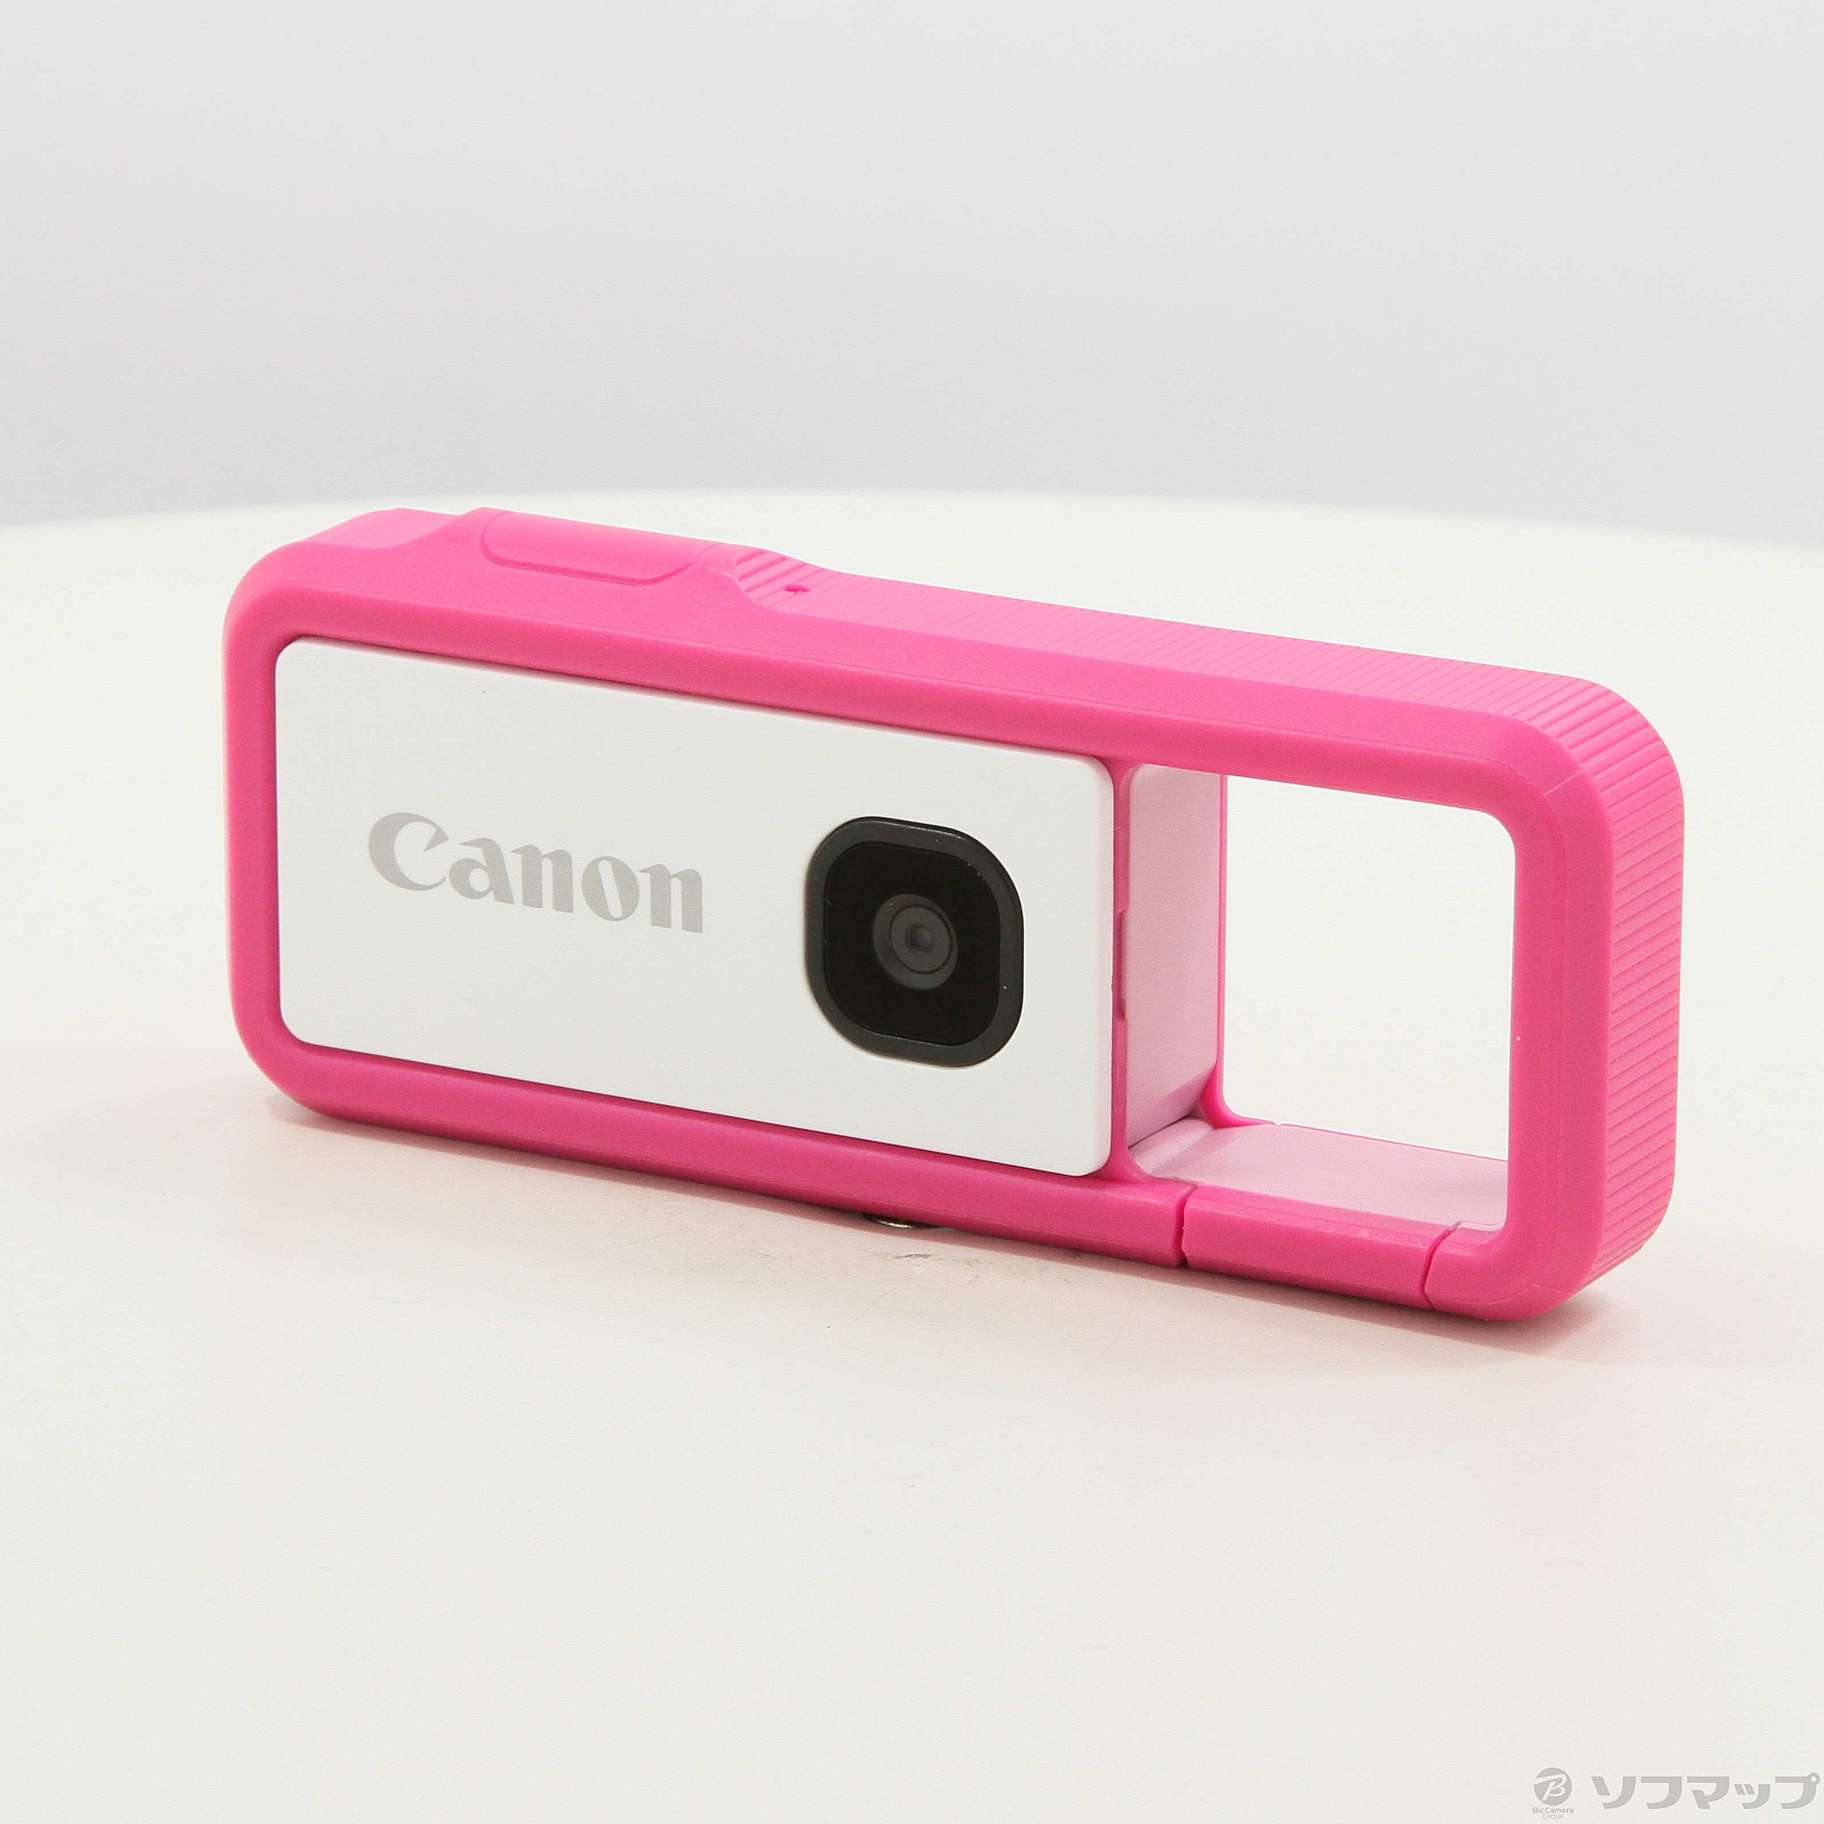 Canon デジタルカメラ ピンクFV-100-PK | www.bonitaexclusive.com